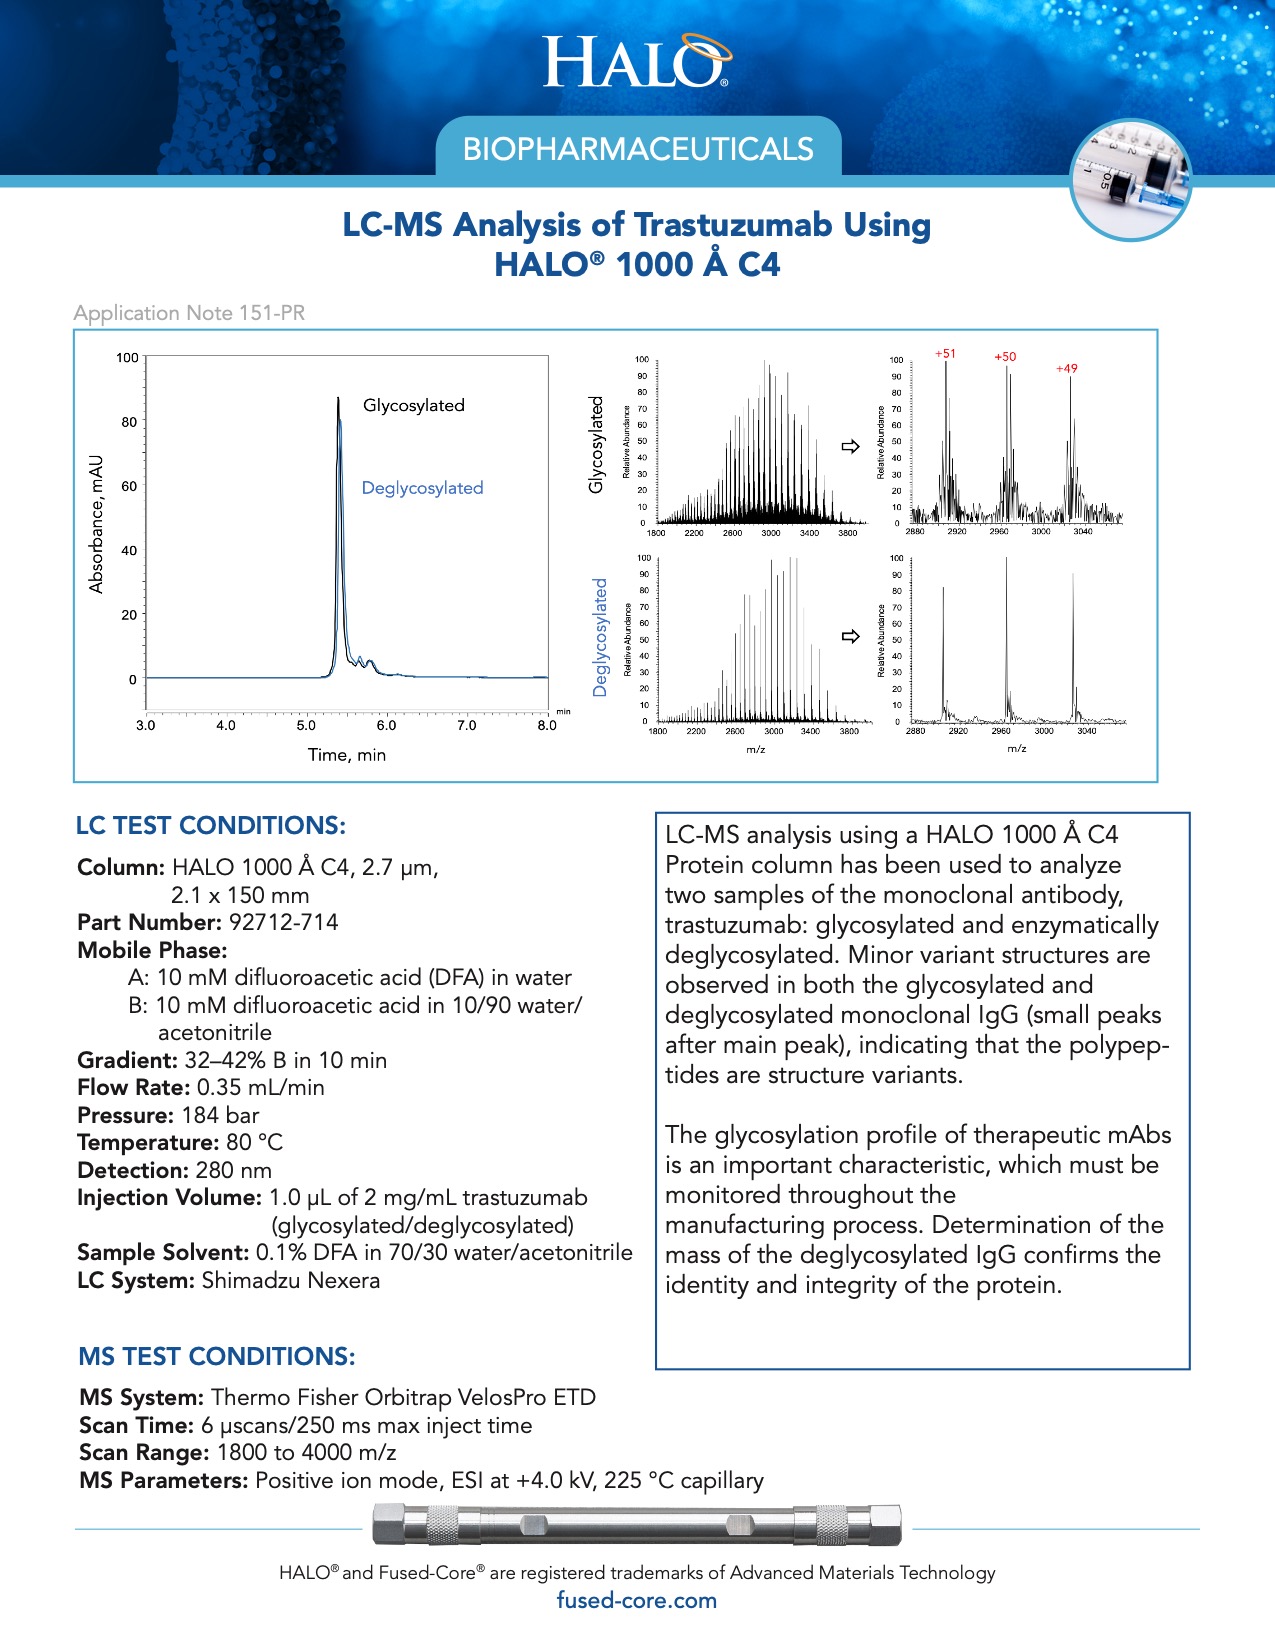 lc-ms analysis of trastuzumab using halo 1000